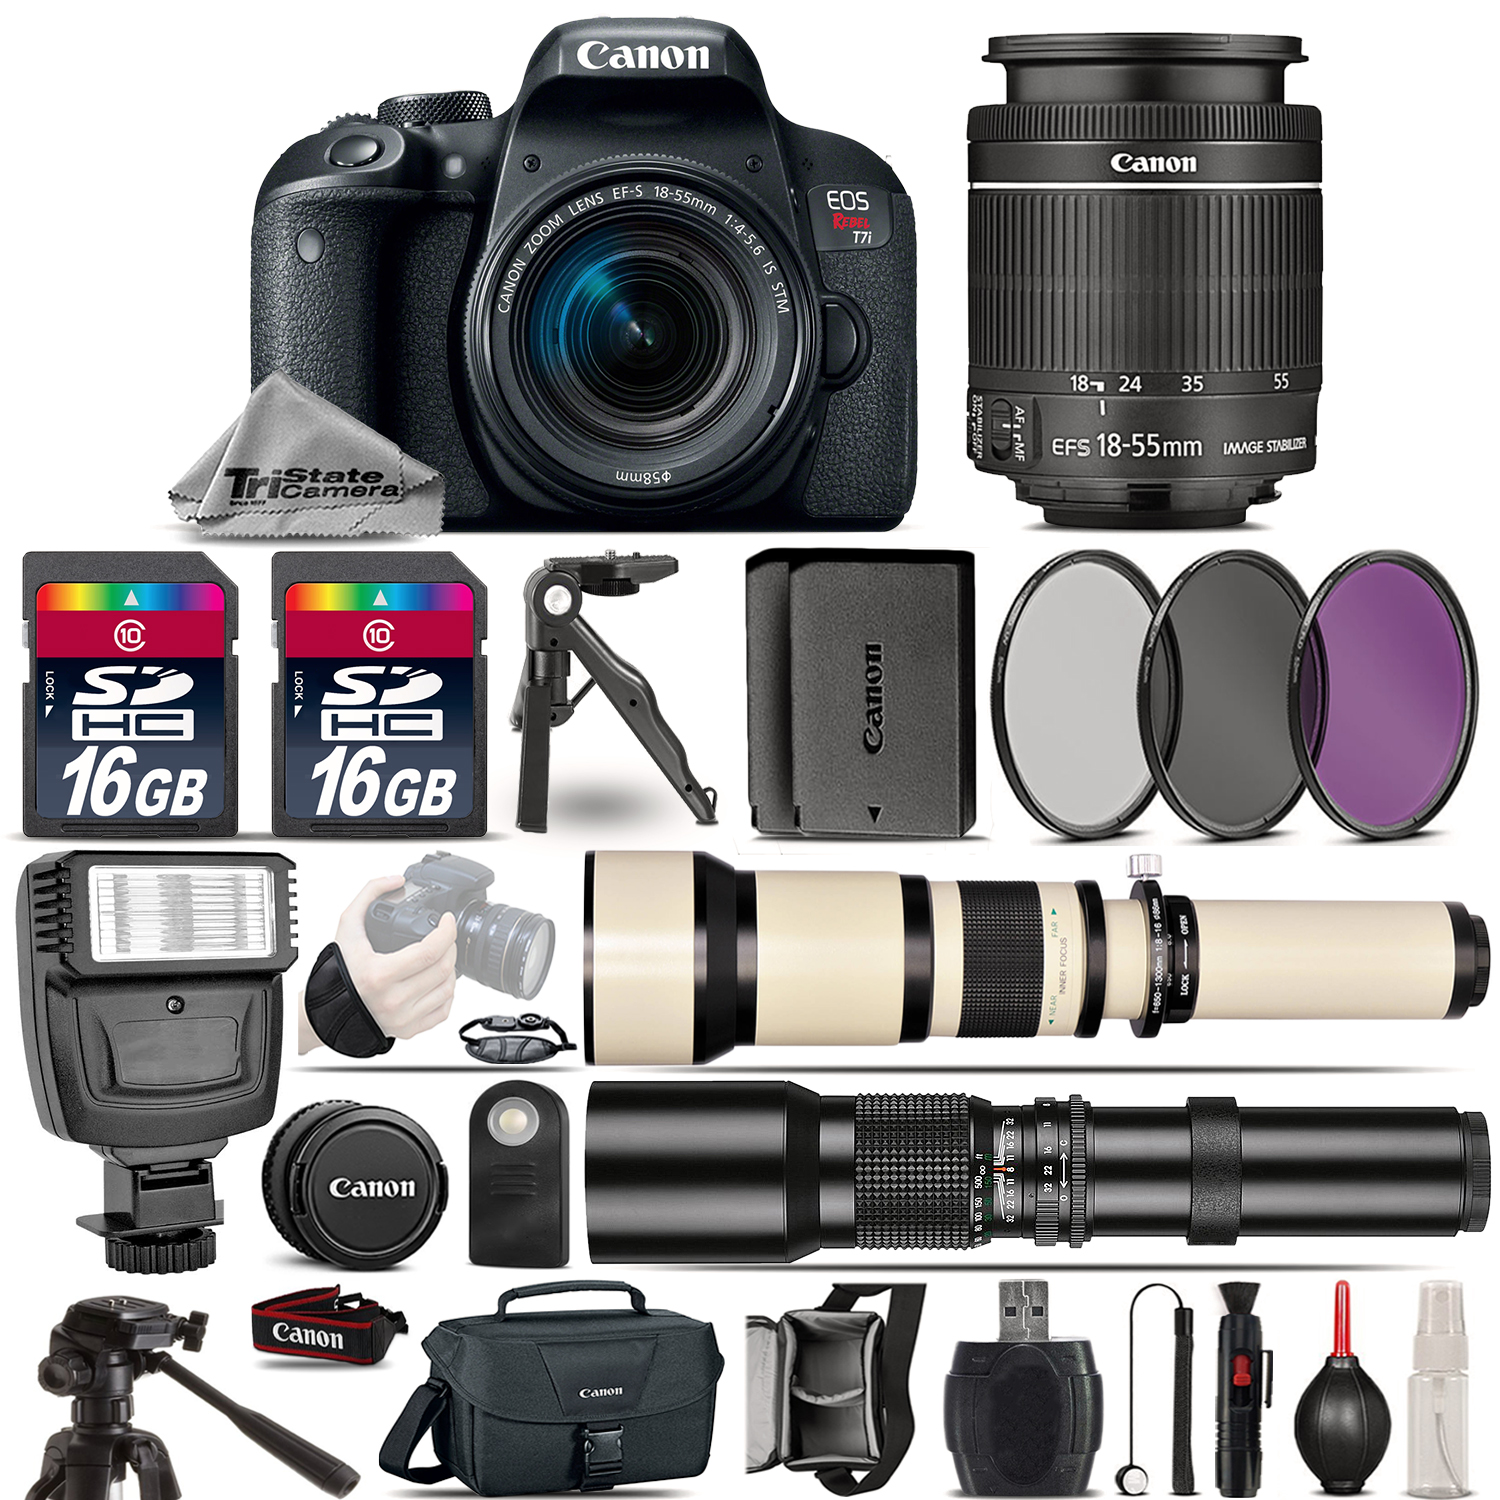 EOS Rebel T7i Camera + 18-55mm IS + 650-1300mm +500mm + EXT BATT -32GB Kit *FREE SHIPPING*